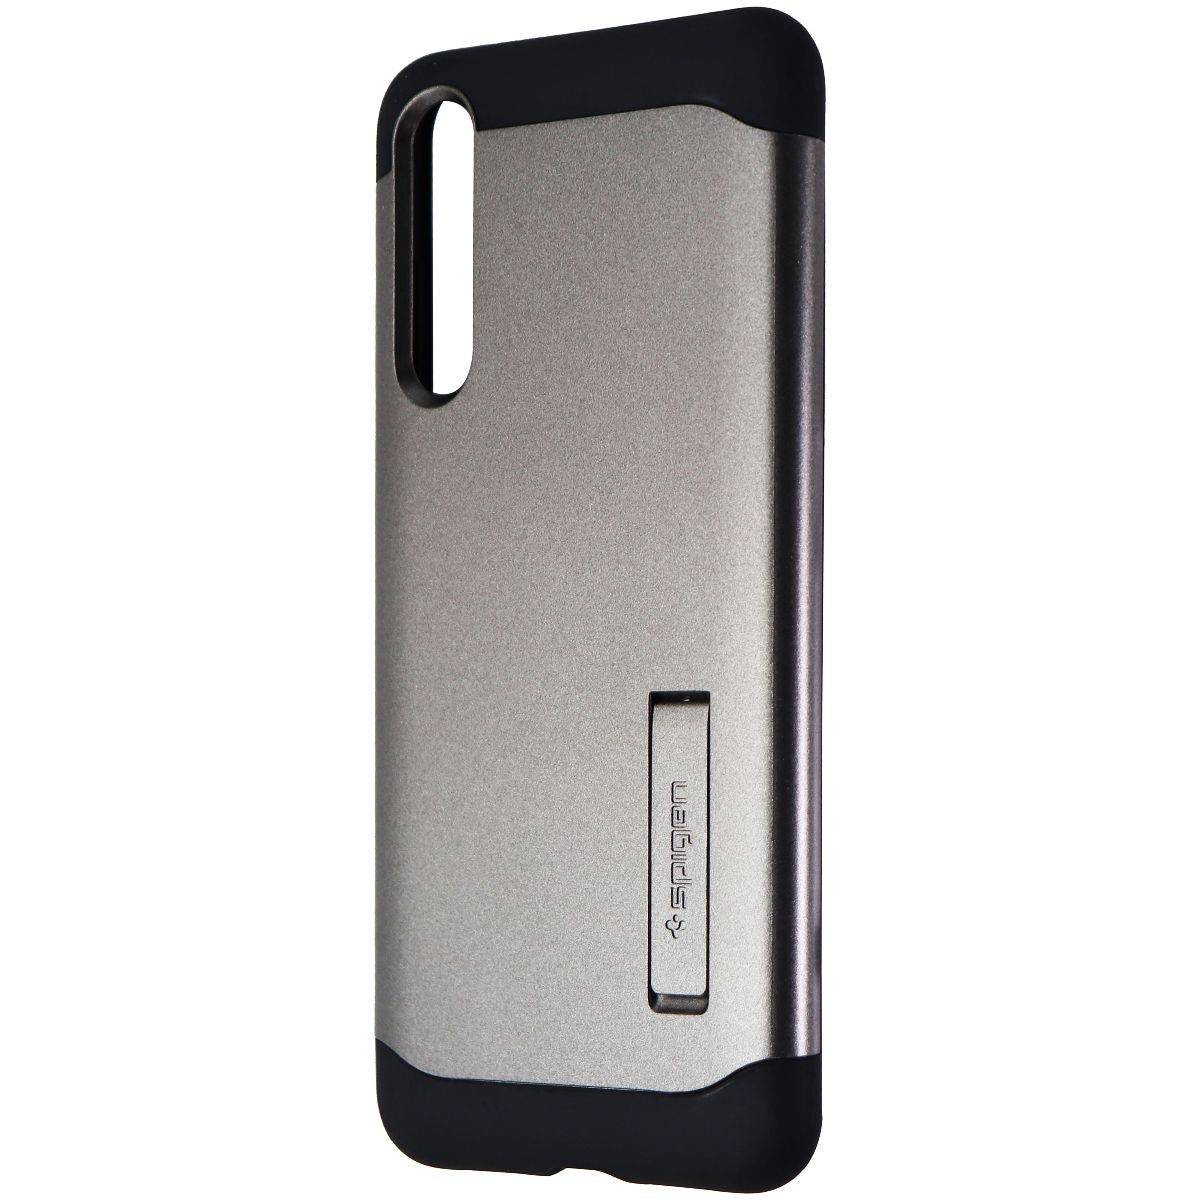 Spigen Slim Armor Dual Layer Case for Huawei P20 Pro - Gunmetal / Black Cell Phone - Cases, Covers & Skins Spigen    - Simple Cell Bulk Wholesale Pricing - USA Seller